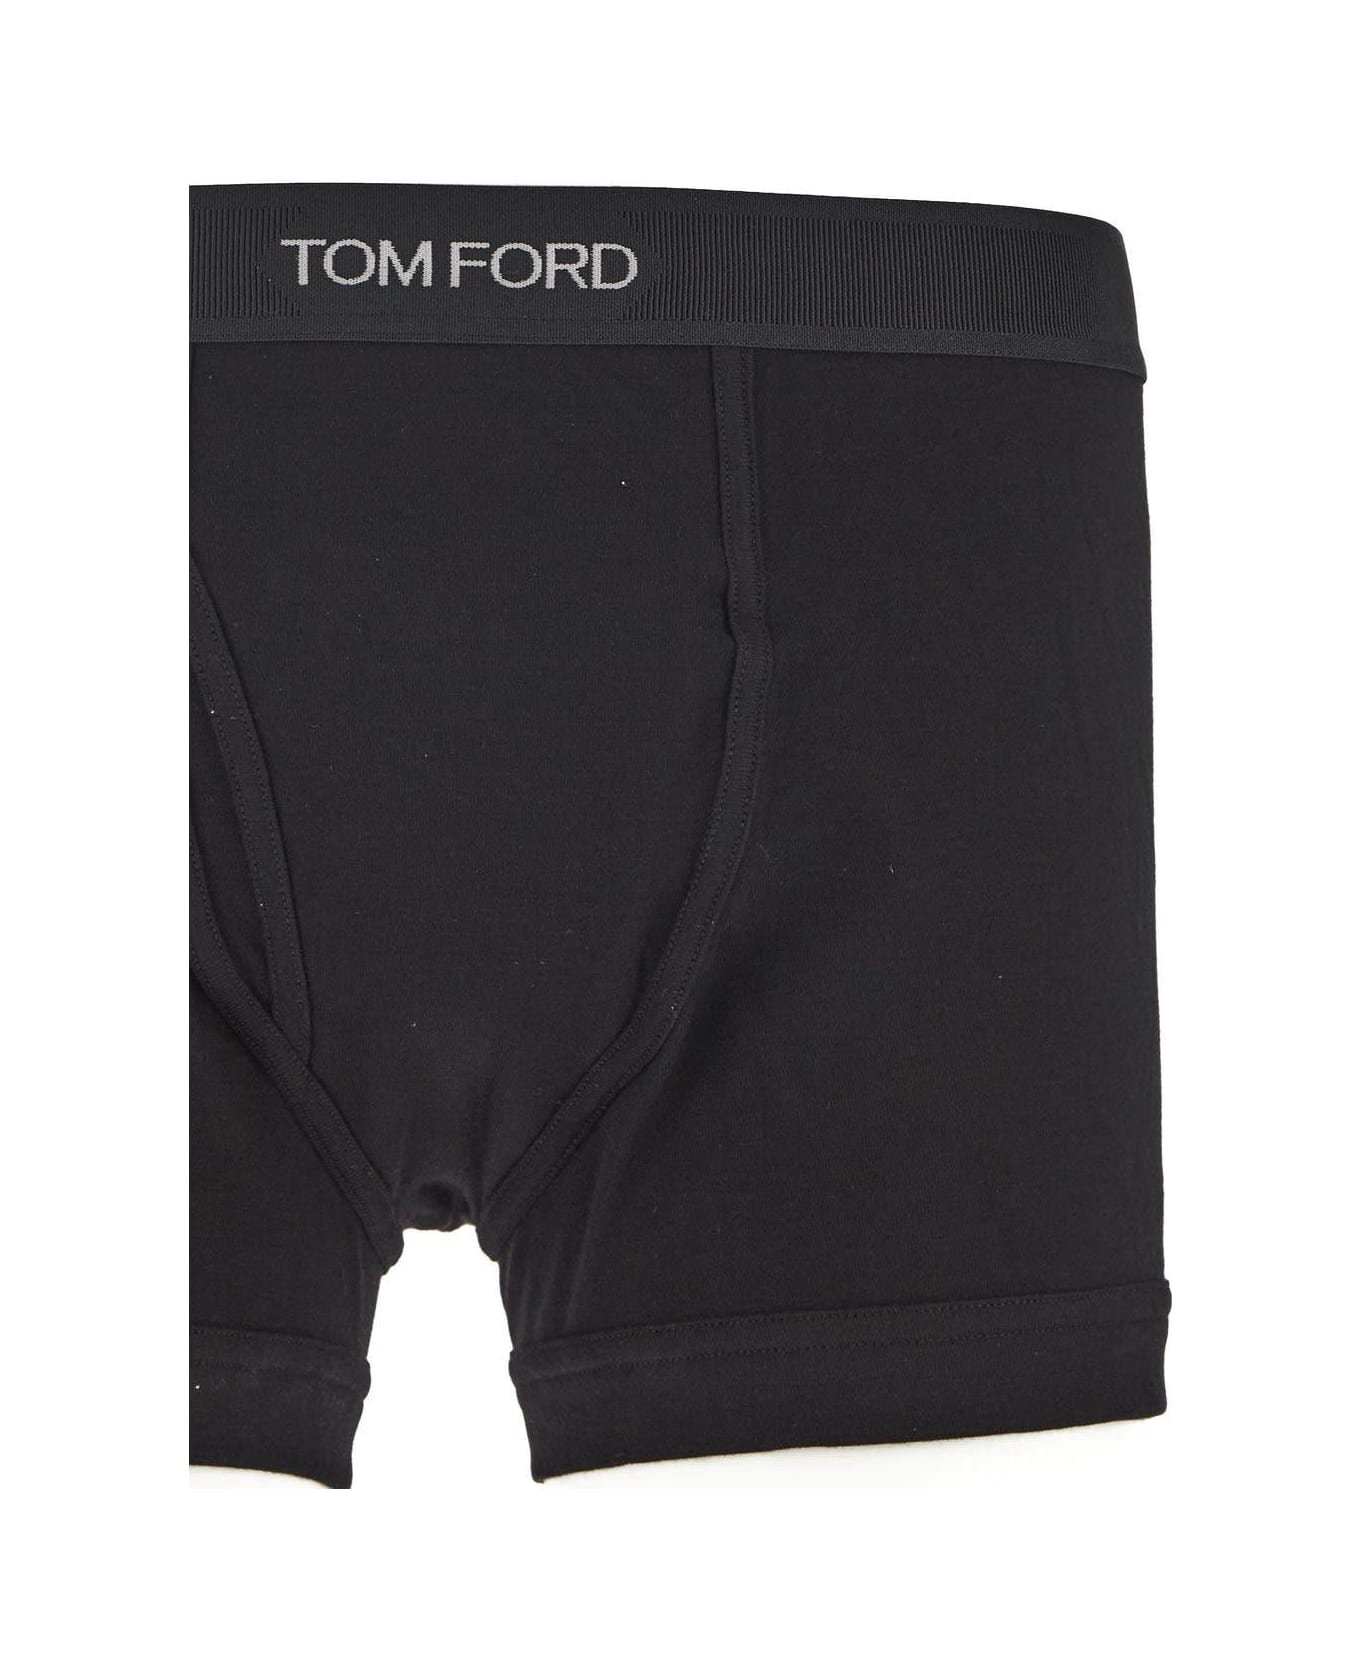 Tom Ford Boxer Brief - BLACK